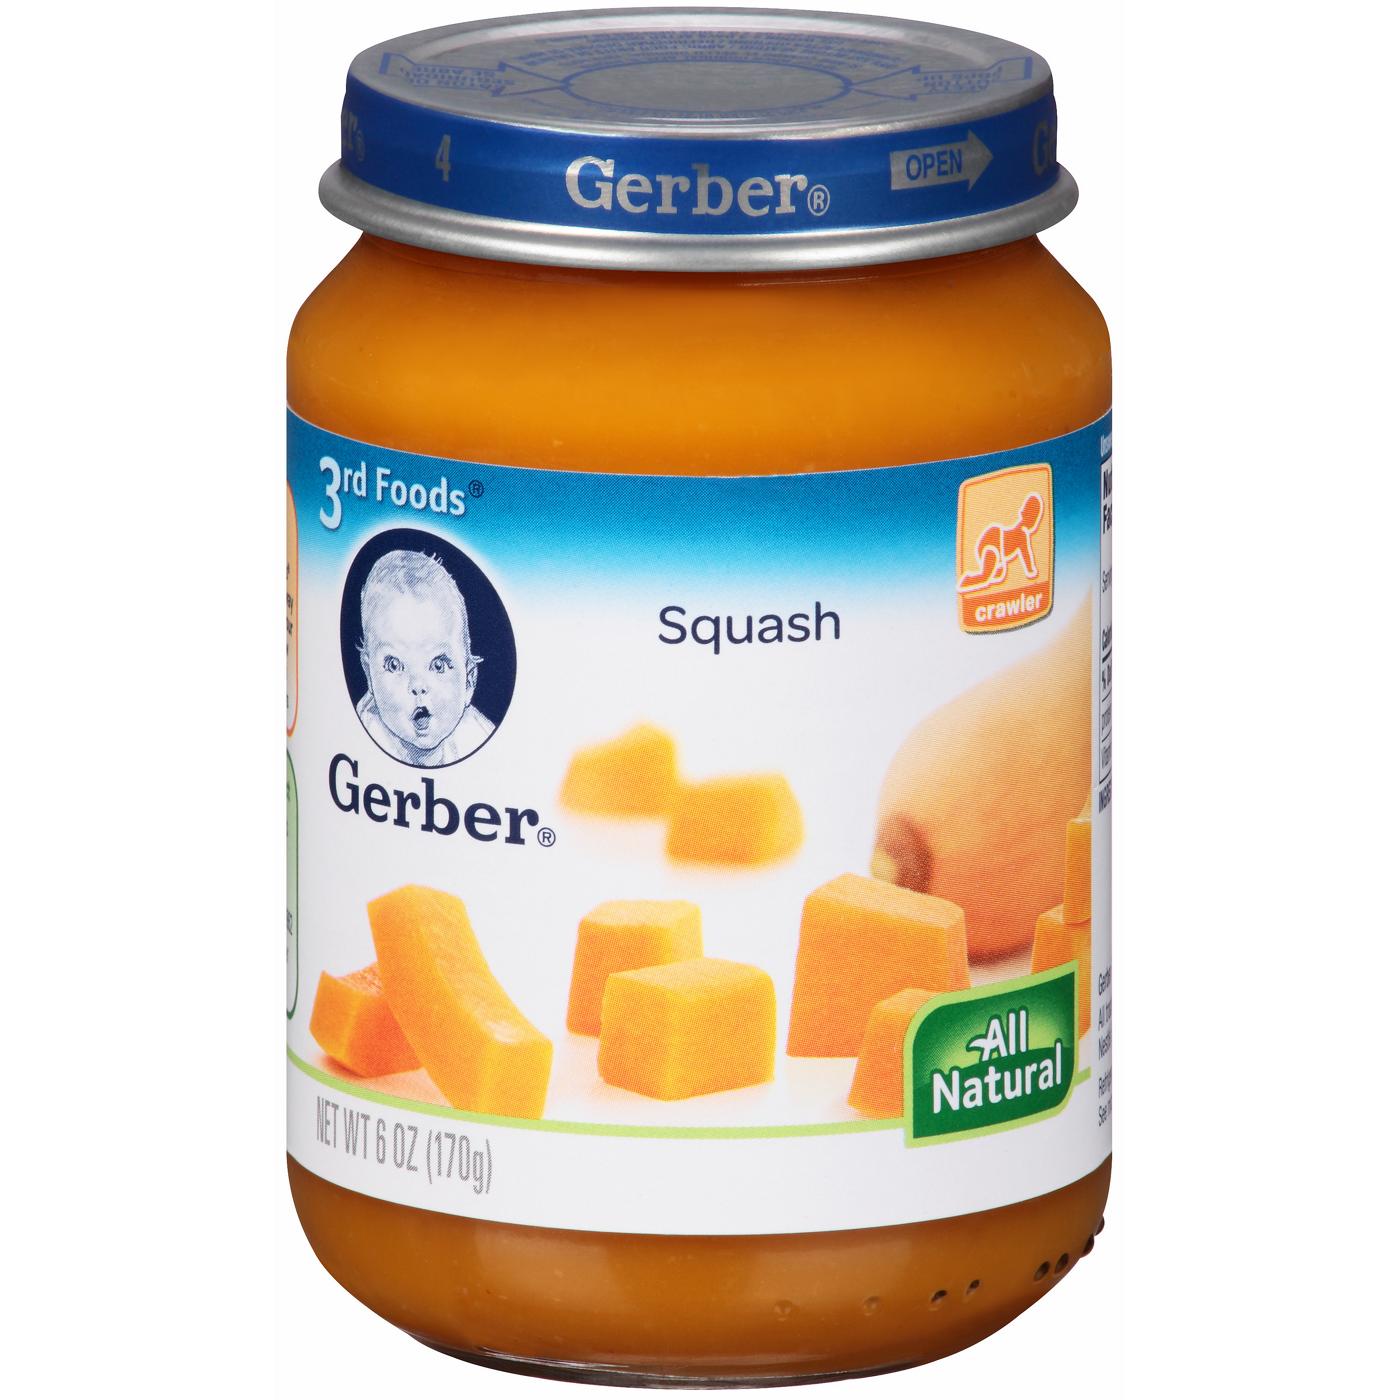 Gerber 3rd Foods - Squash; image 1 of 2